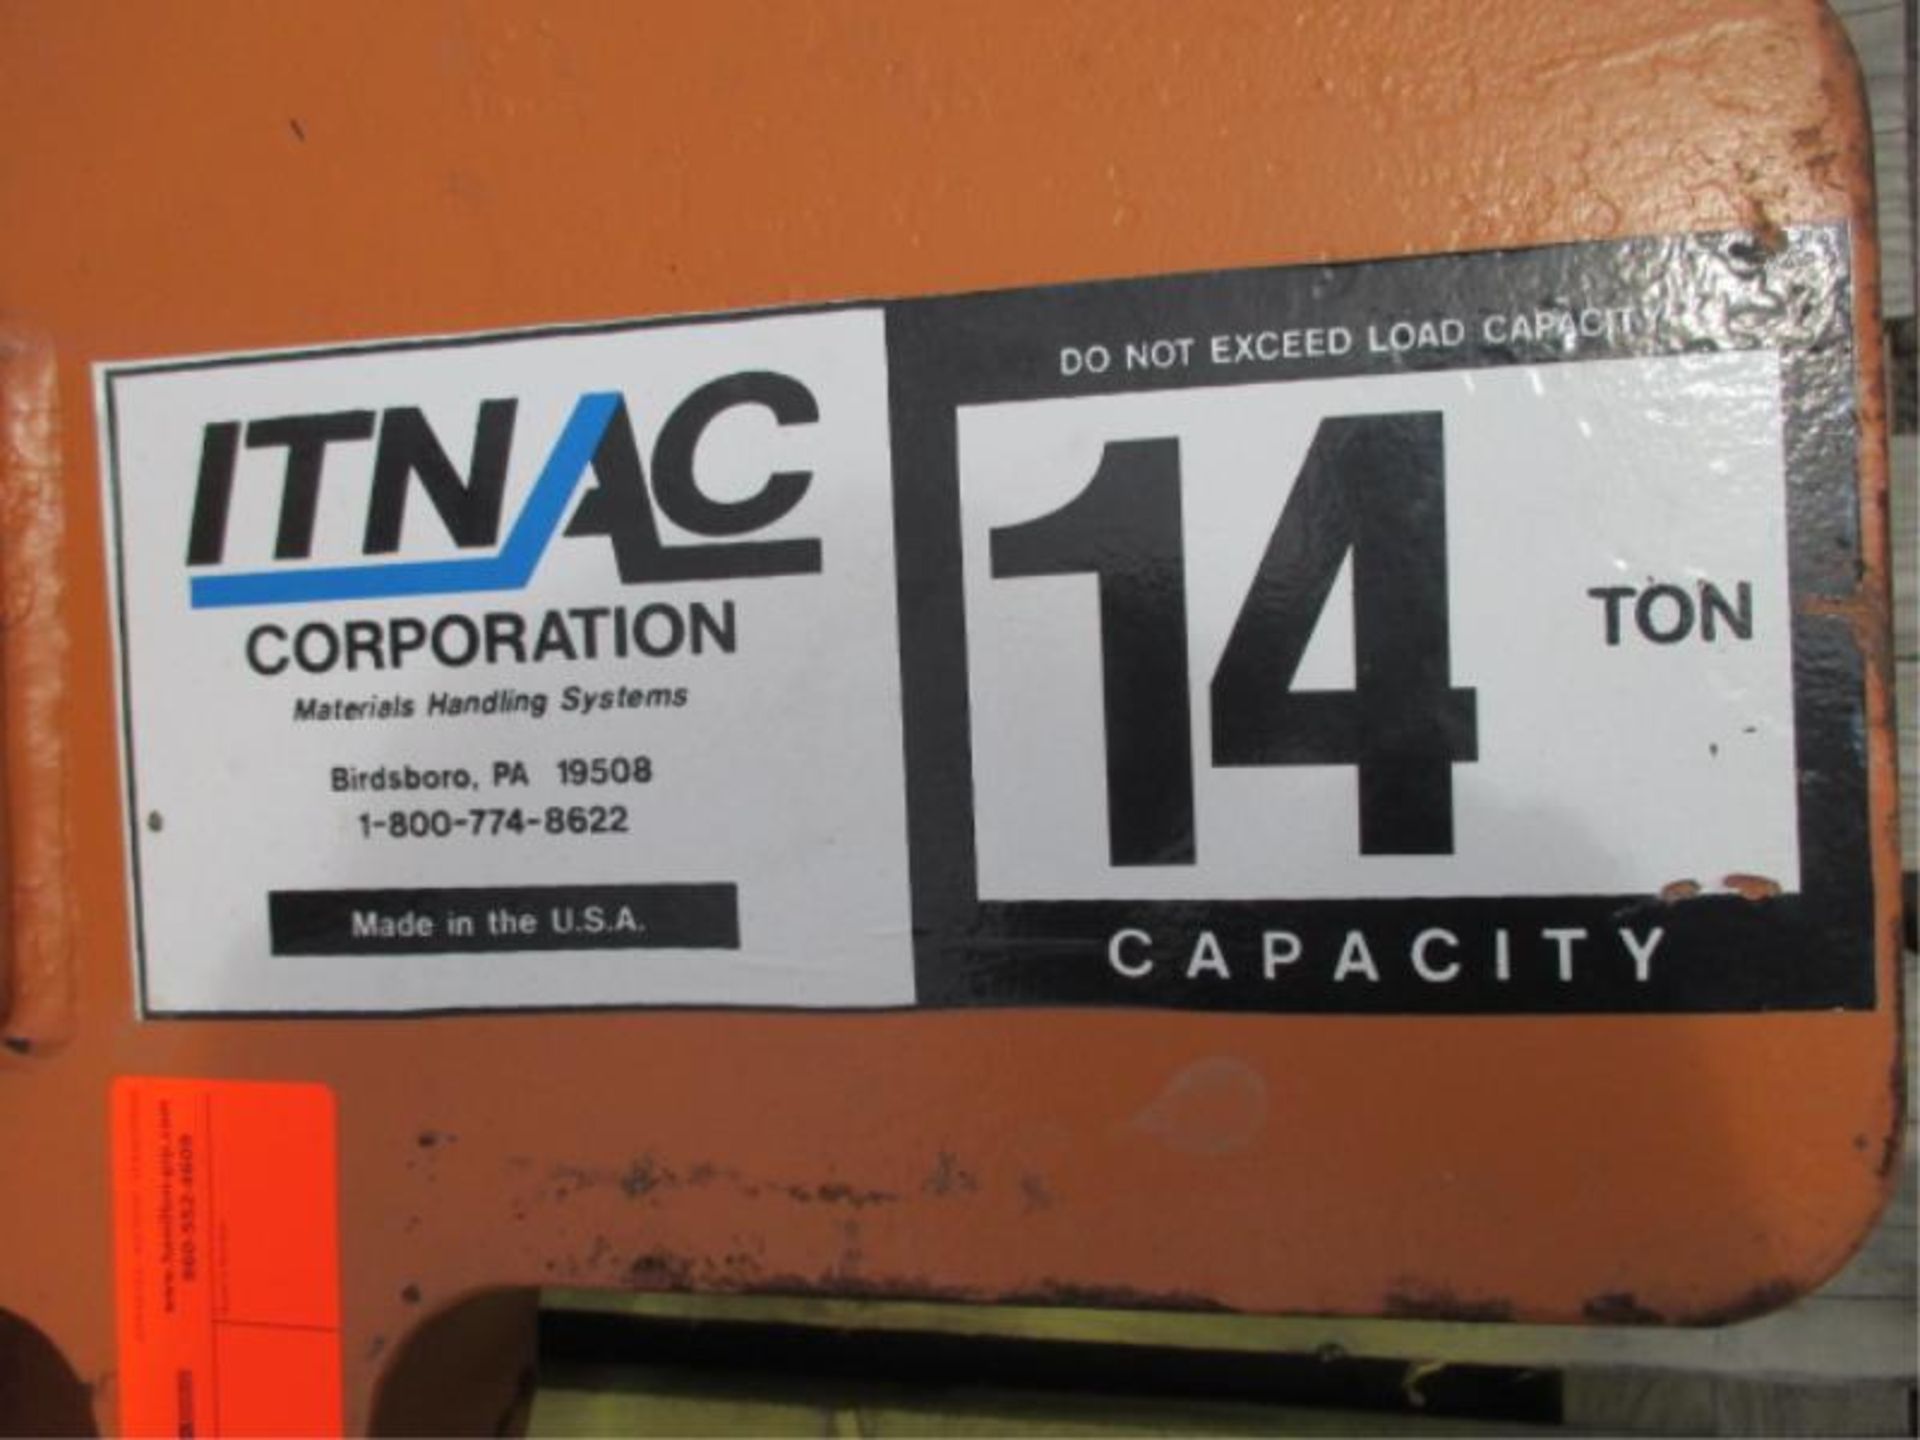 Itnac Coil Handler, 14 Ton Capacity. Unused - Image 5 of 5